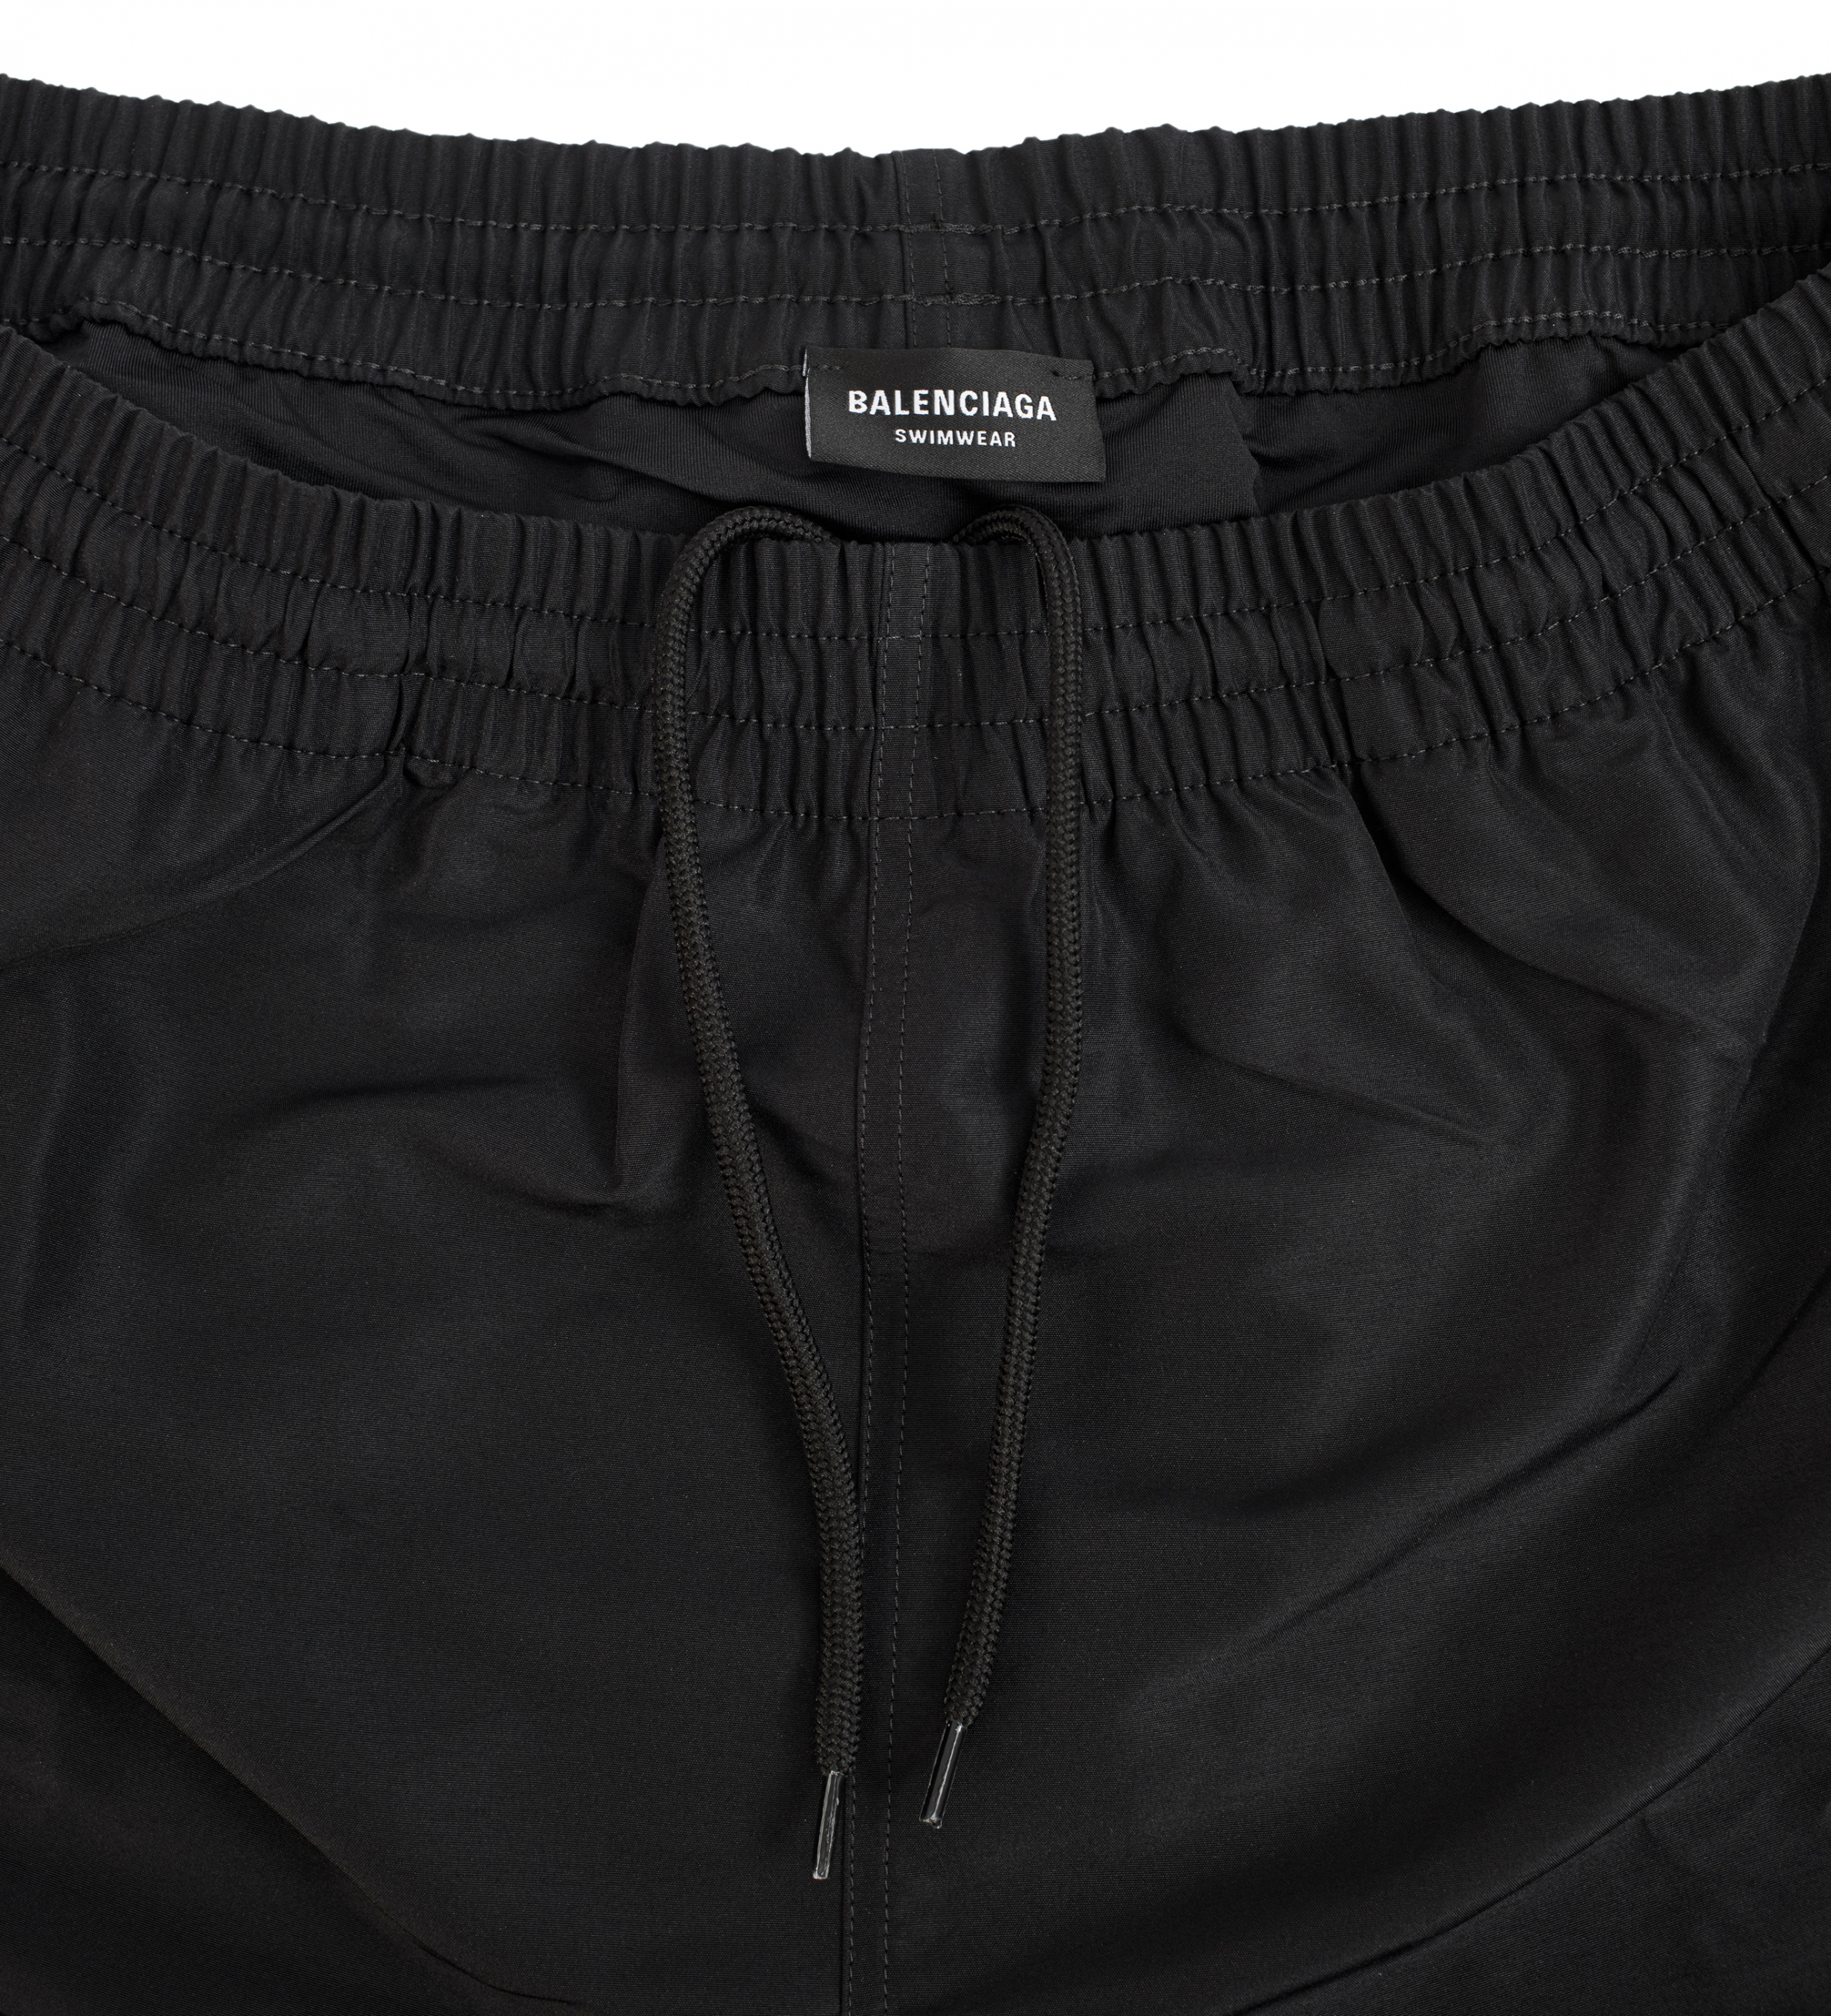 Черные плавки с вышивкой Balenciaga 657033/4A8B6/1000, размер L;M;S 657033/4A8B6/1000 - фото 3